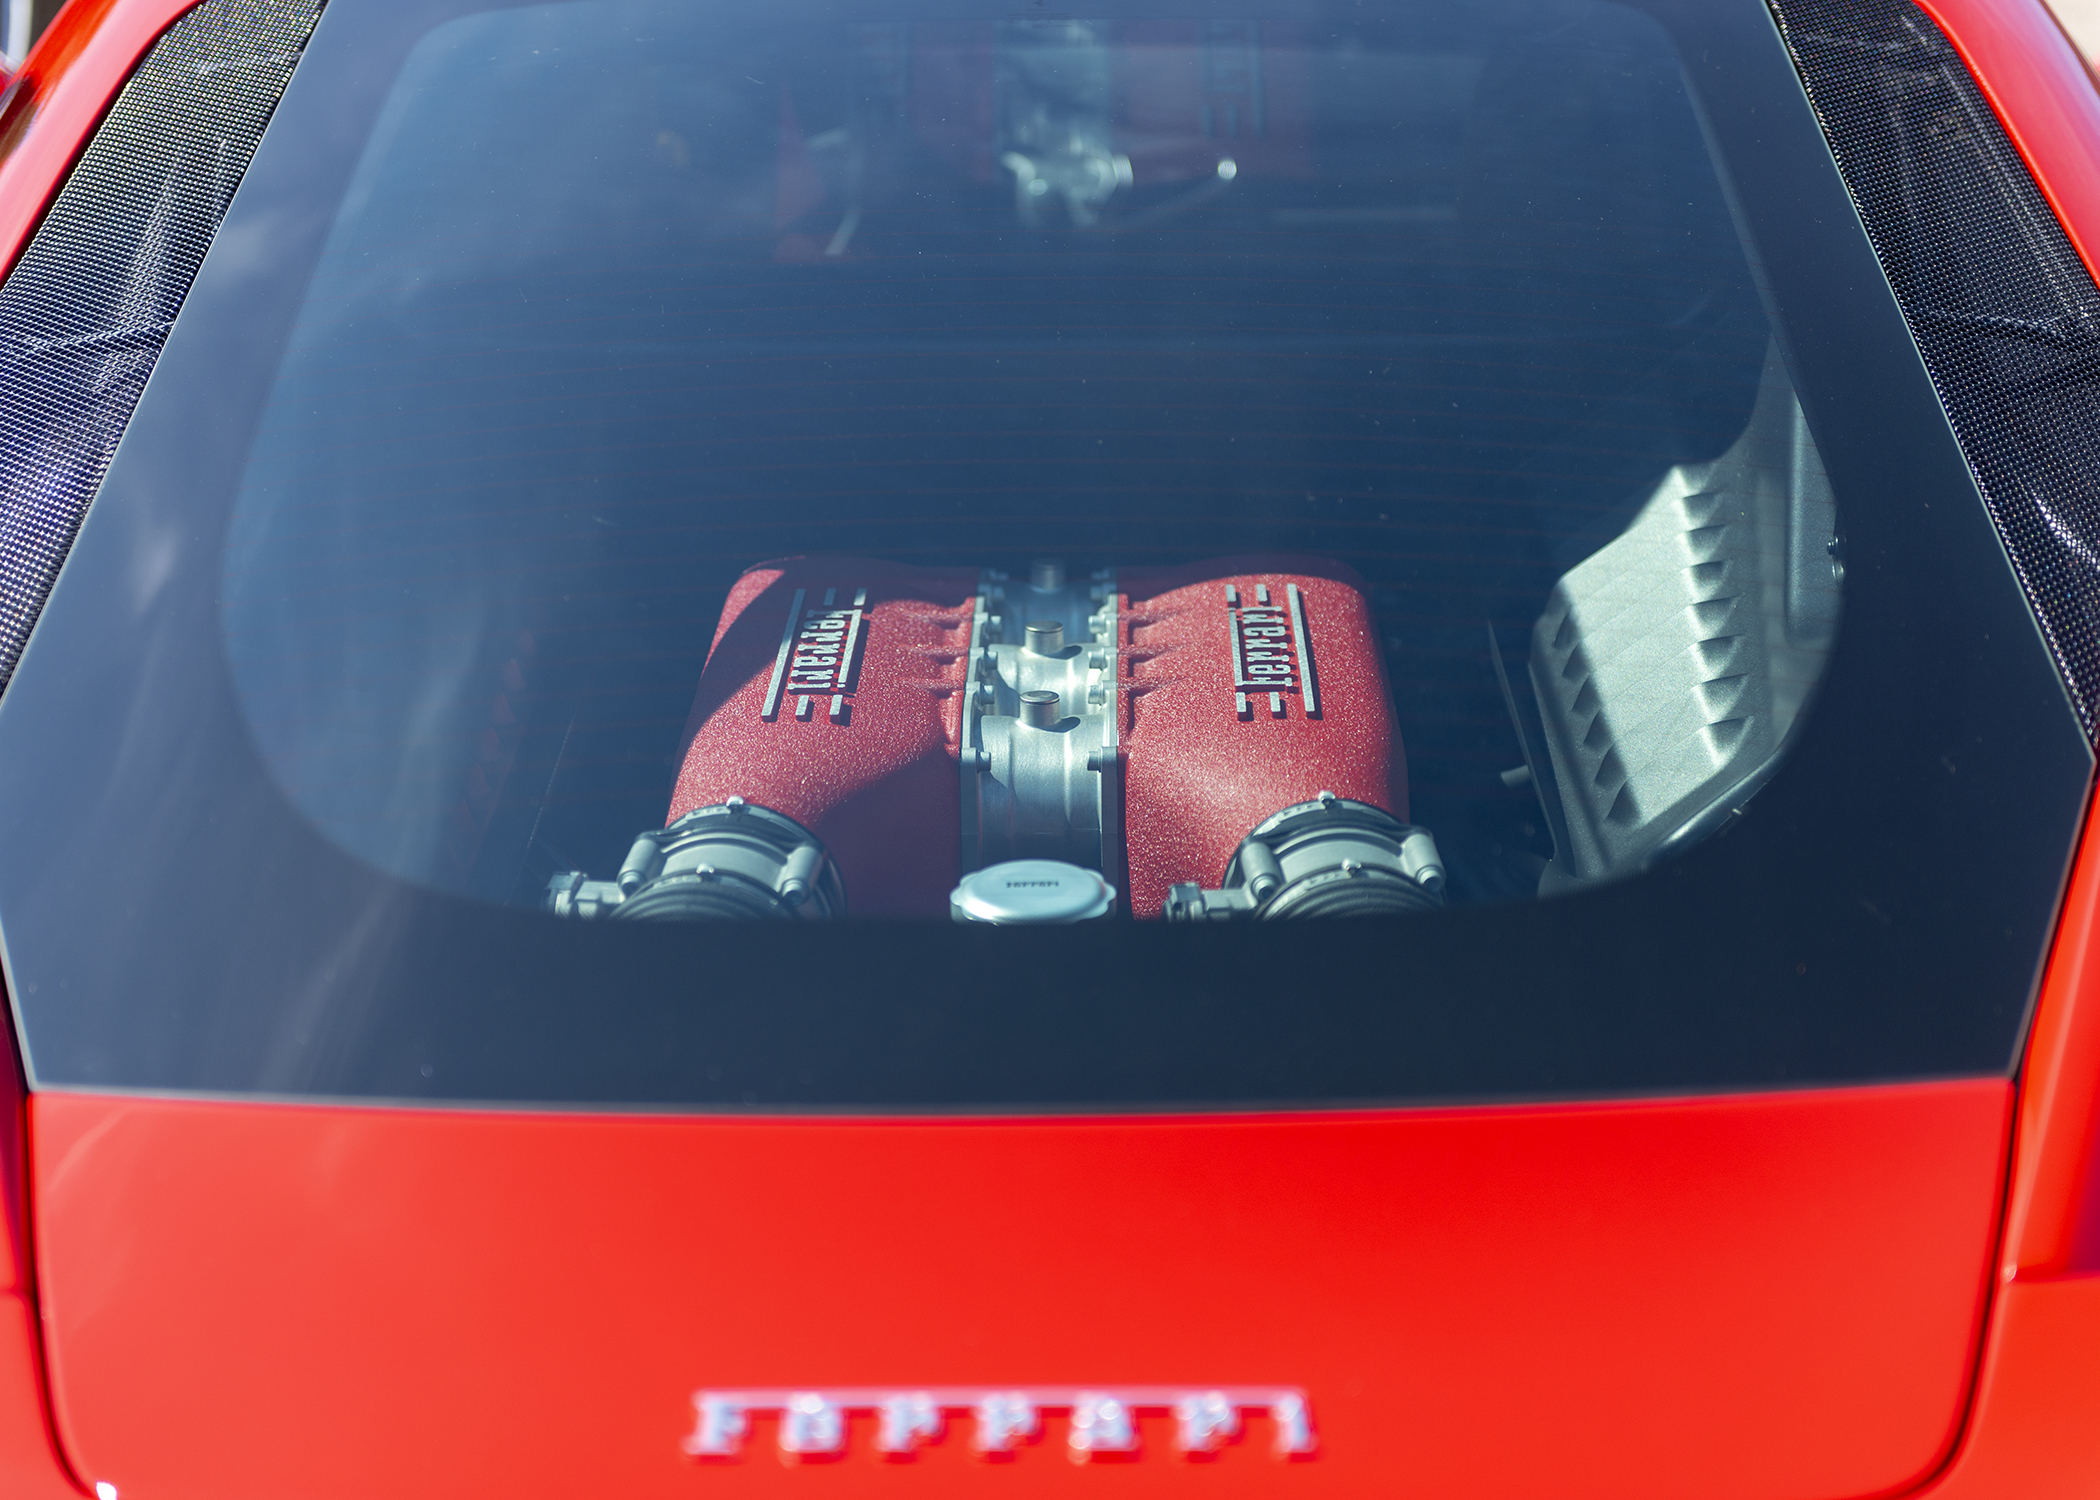   Ferrari 458 Engine. 4.5 Liter Flat-Plane V8. 597 Horsepower. Max Engine Speed - 9000rpm!  